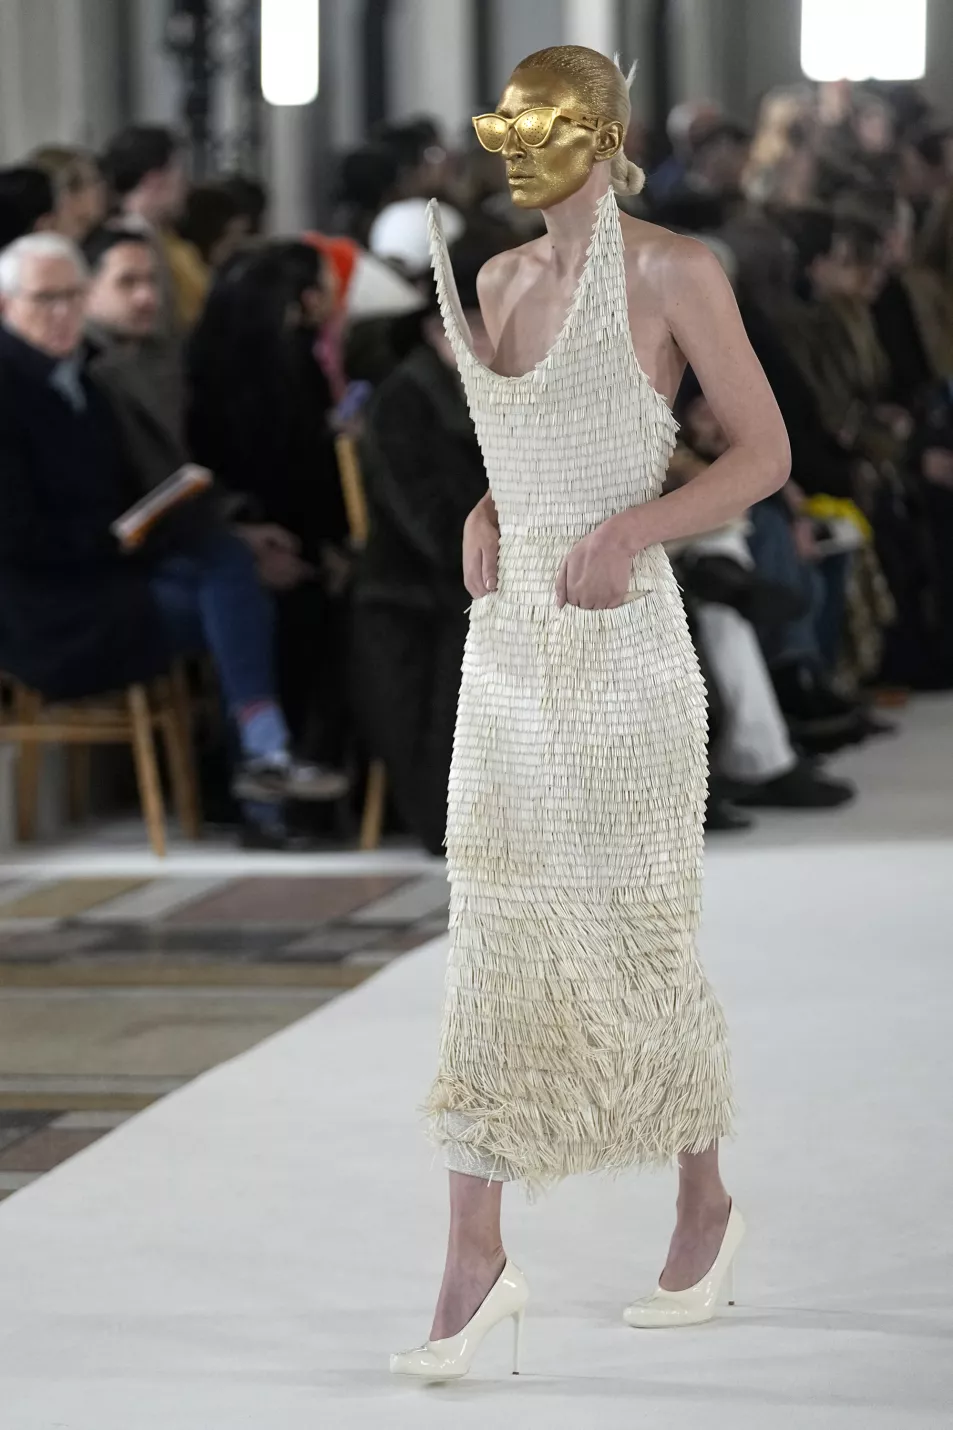 A Rare Peek Inside Paris Couture, Where a Dress Costs $100,000